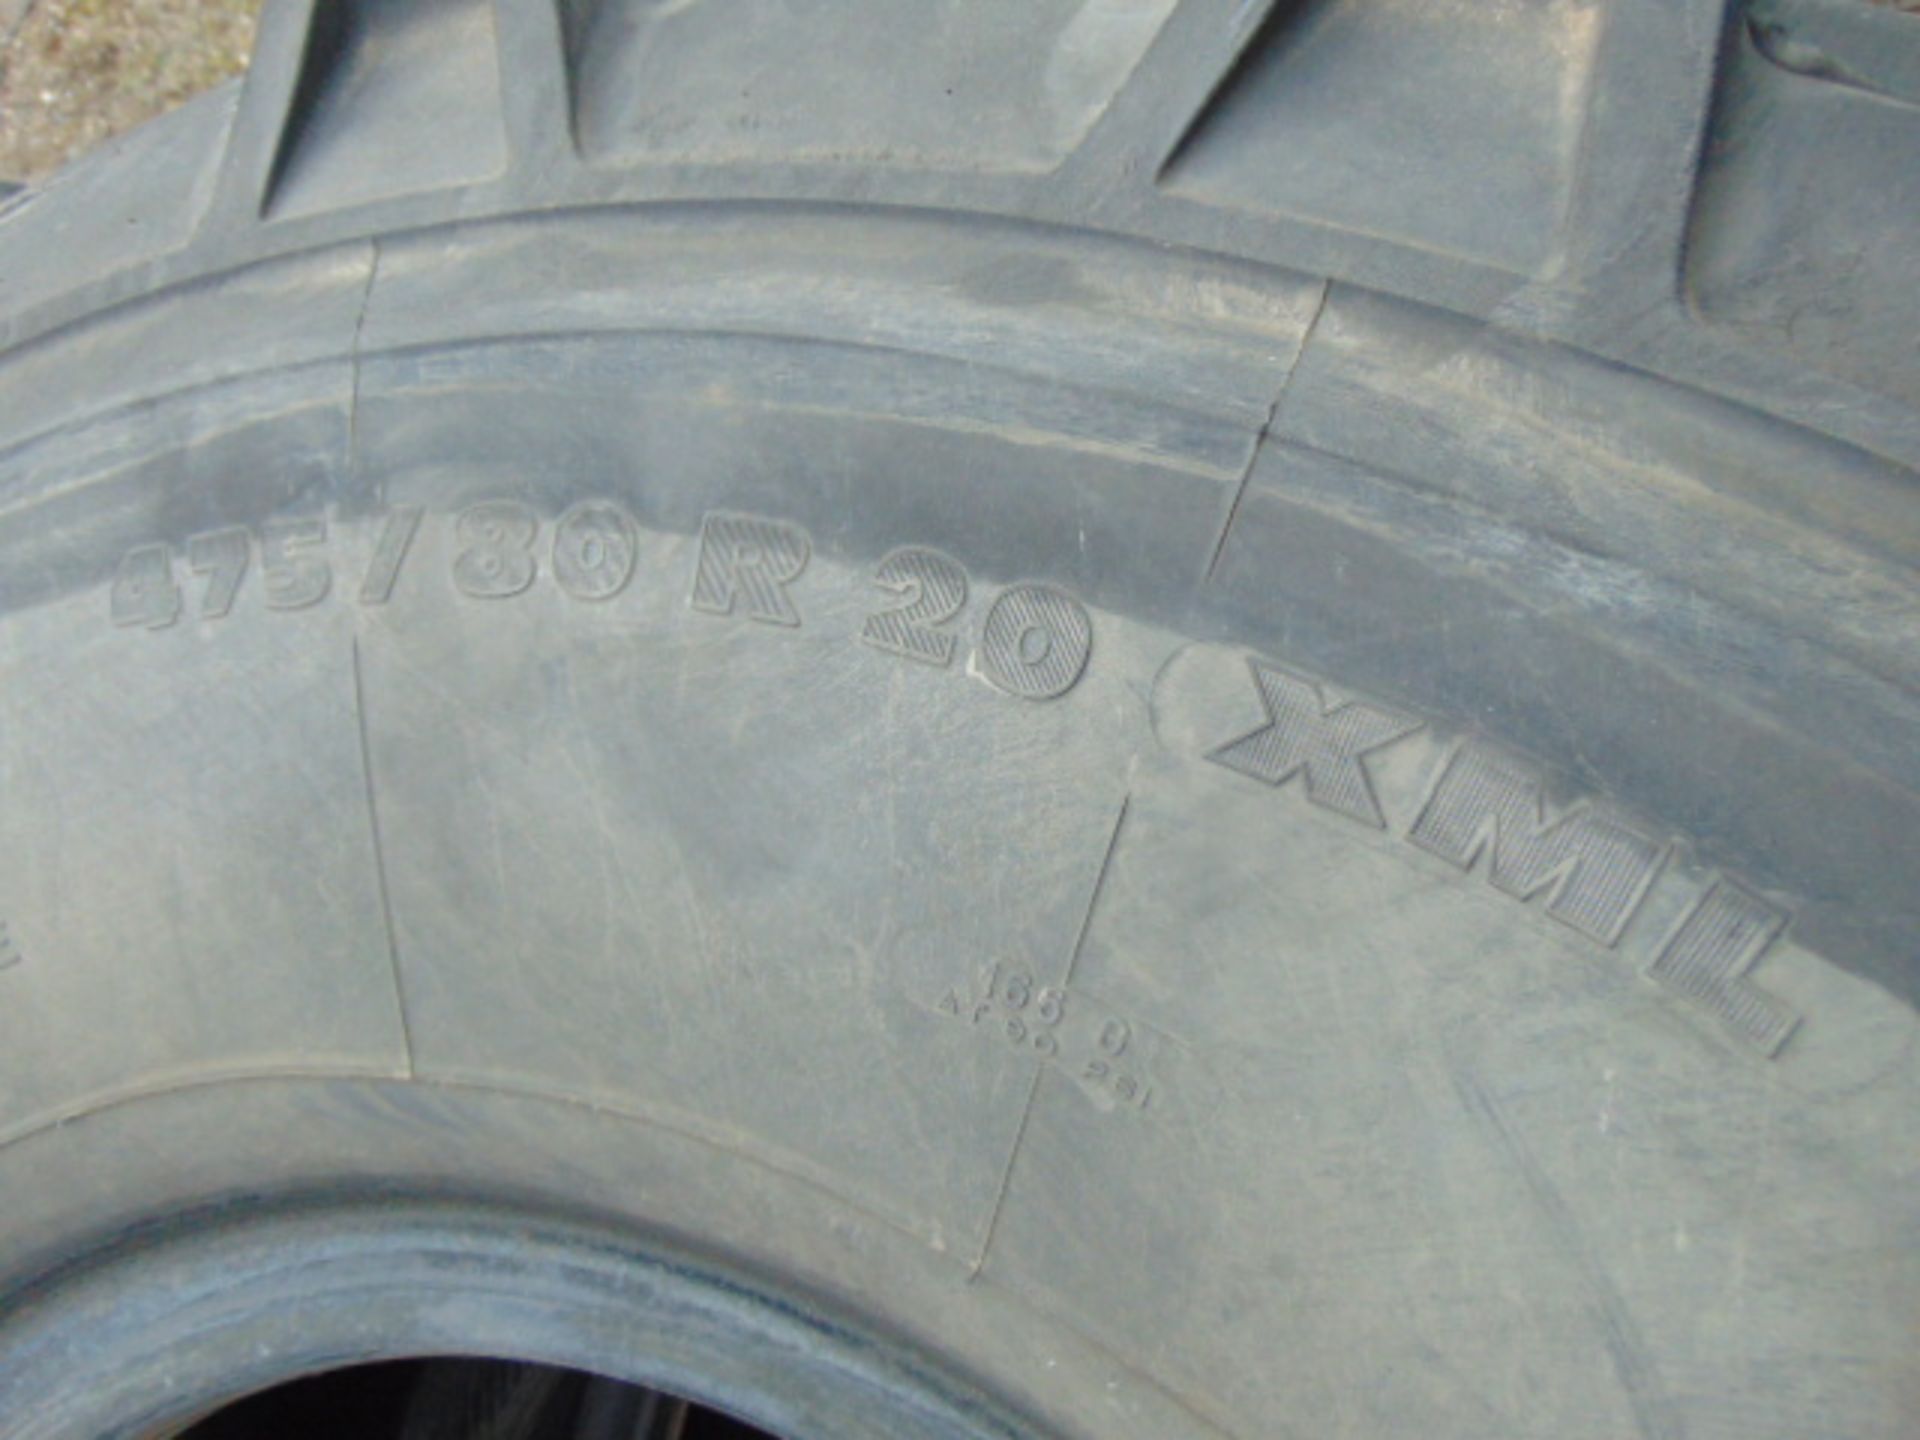 4 x Michelin XML 475/80 R20 Tyres - Image 6 of 6